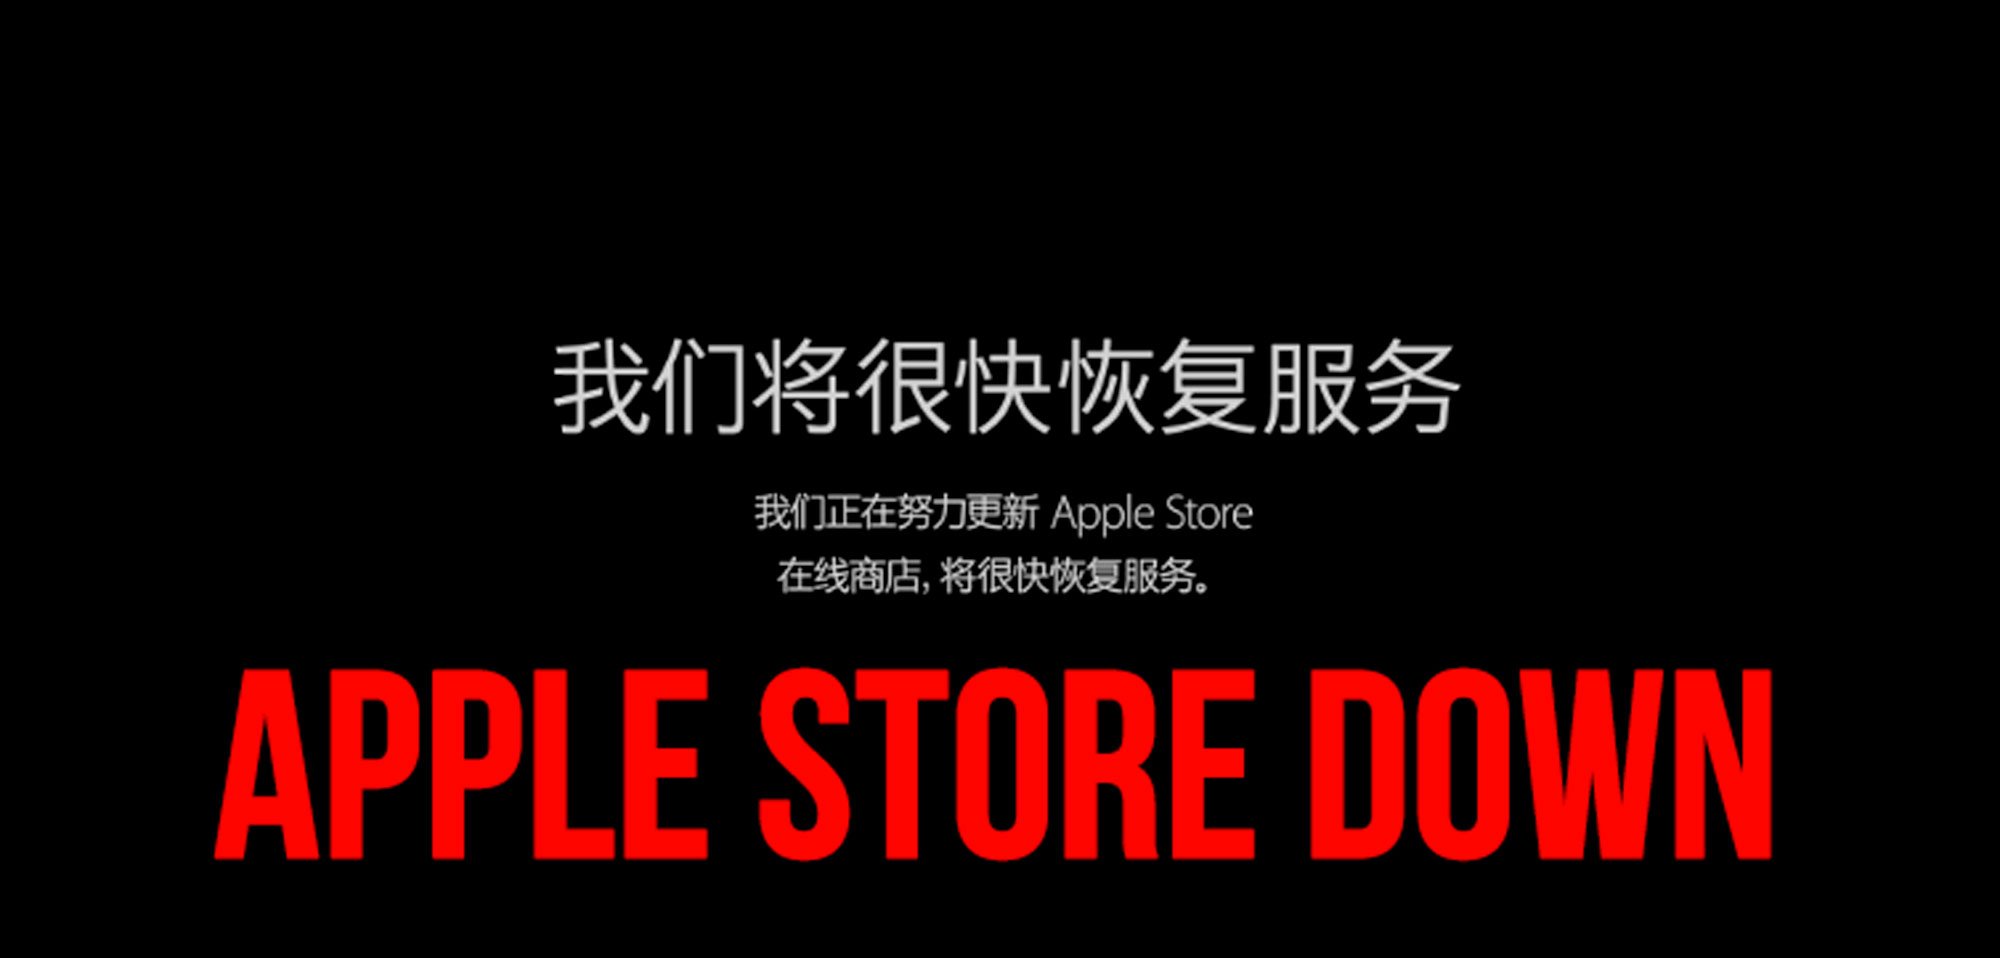 Apple Store down: Neue iPads und iMacs! 9